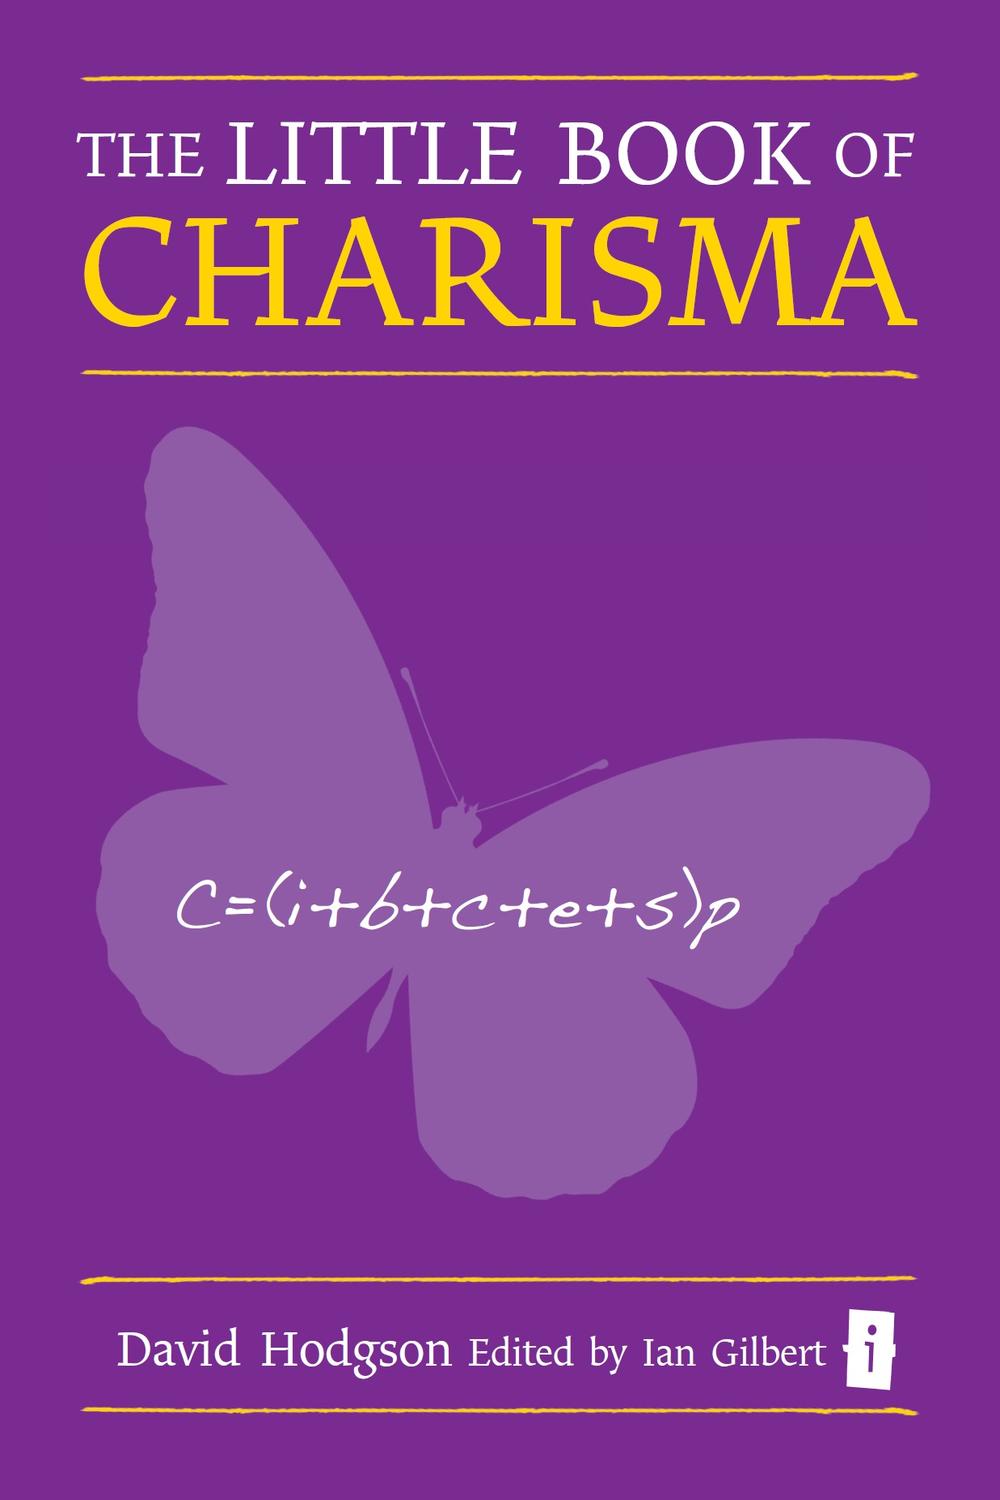 The Little Book of Charisma - David Hodgson, Ian Gilbert